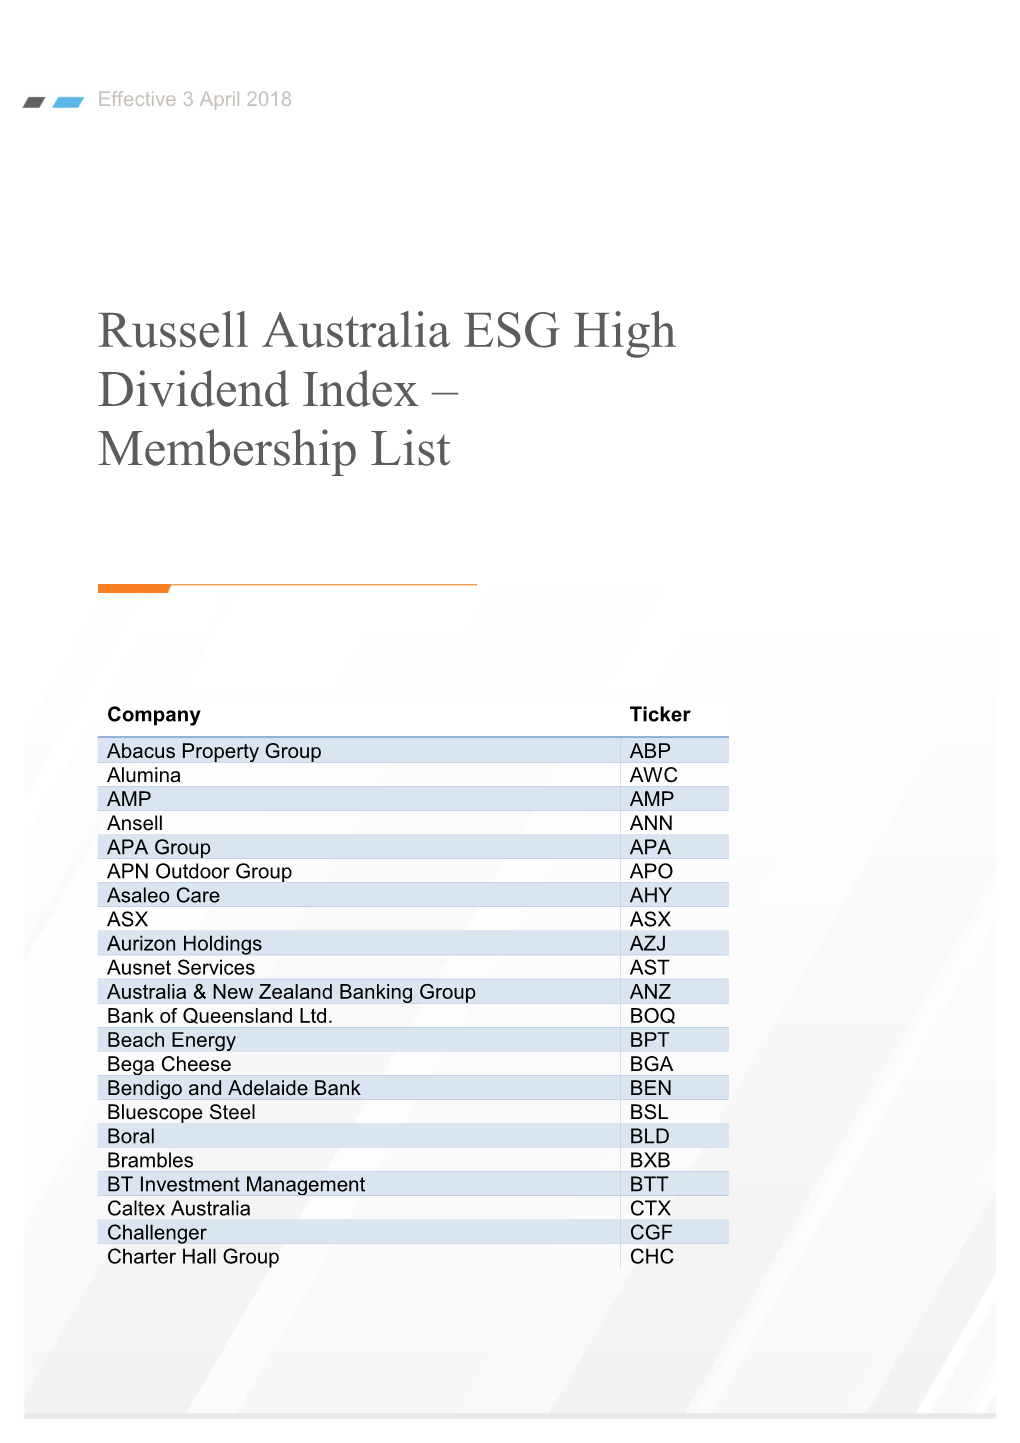 Russell Australia ESG High Dividend Index – Membership List